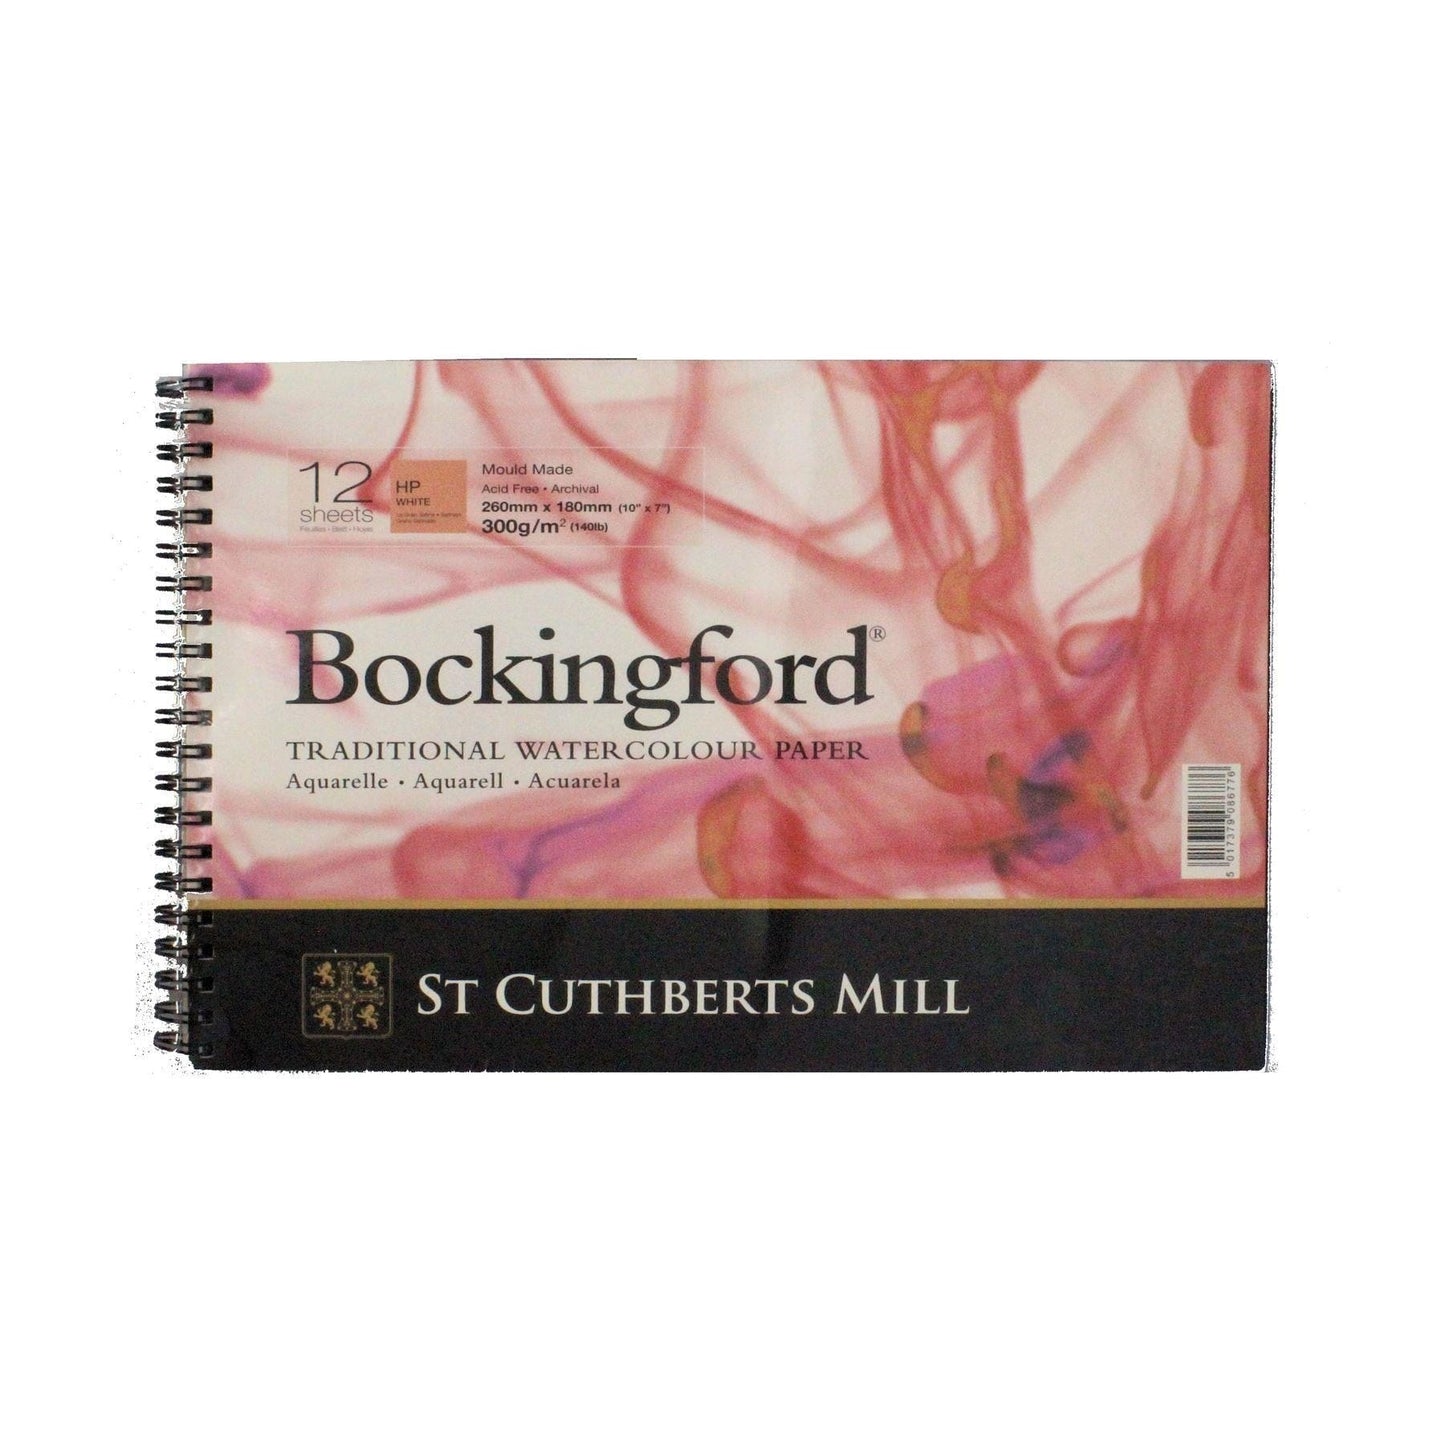 St. Cuthberts Mill Watercolour Pad - Spiralbound Bockingford - Spiralbound Watercolour Pad - Hot Press - 140lb - 10x7" - Item #45230001011B